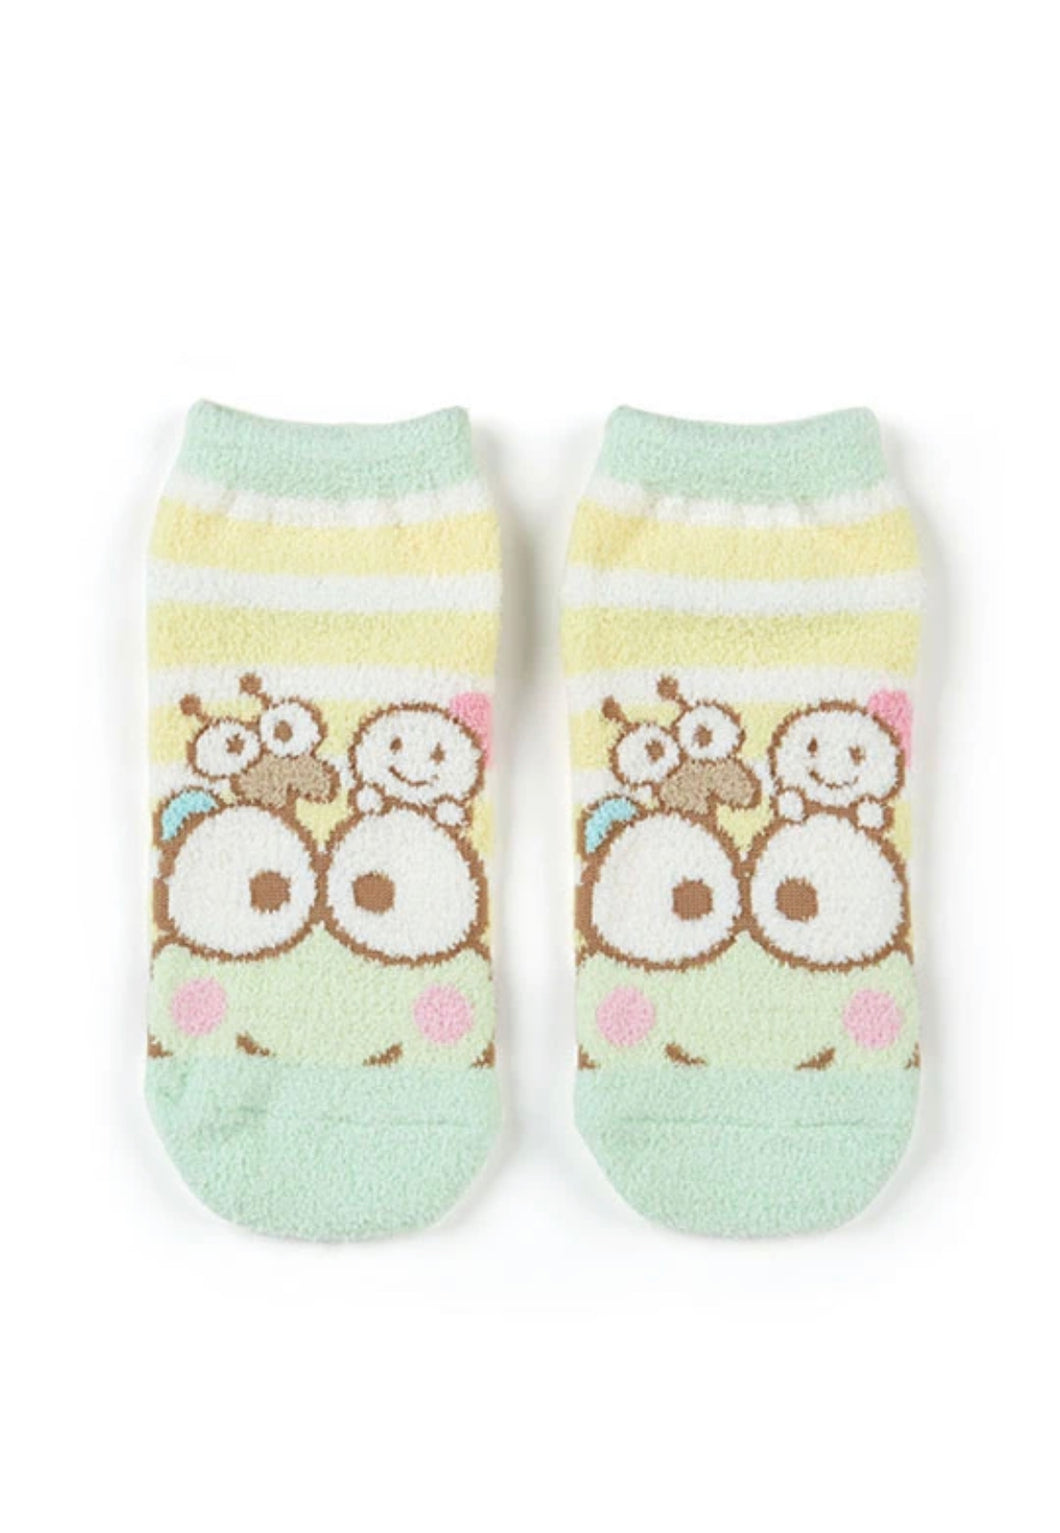 Keroppi Green and Cream Striped Socks